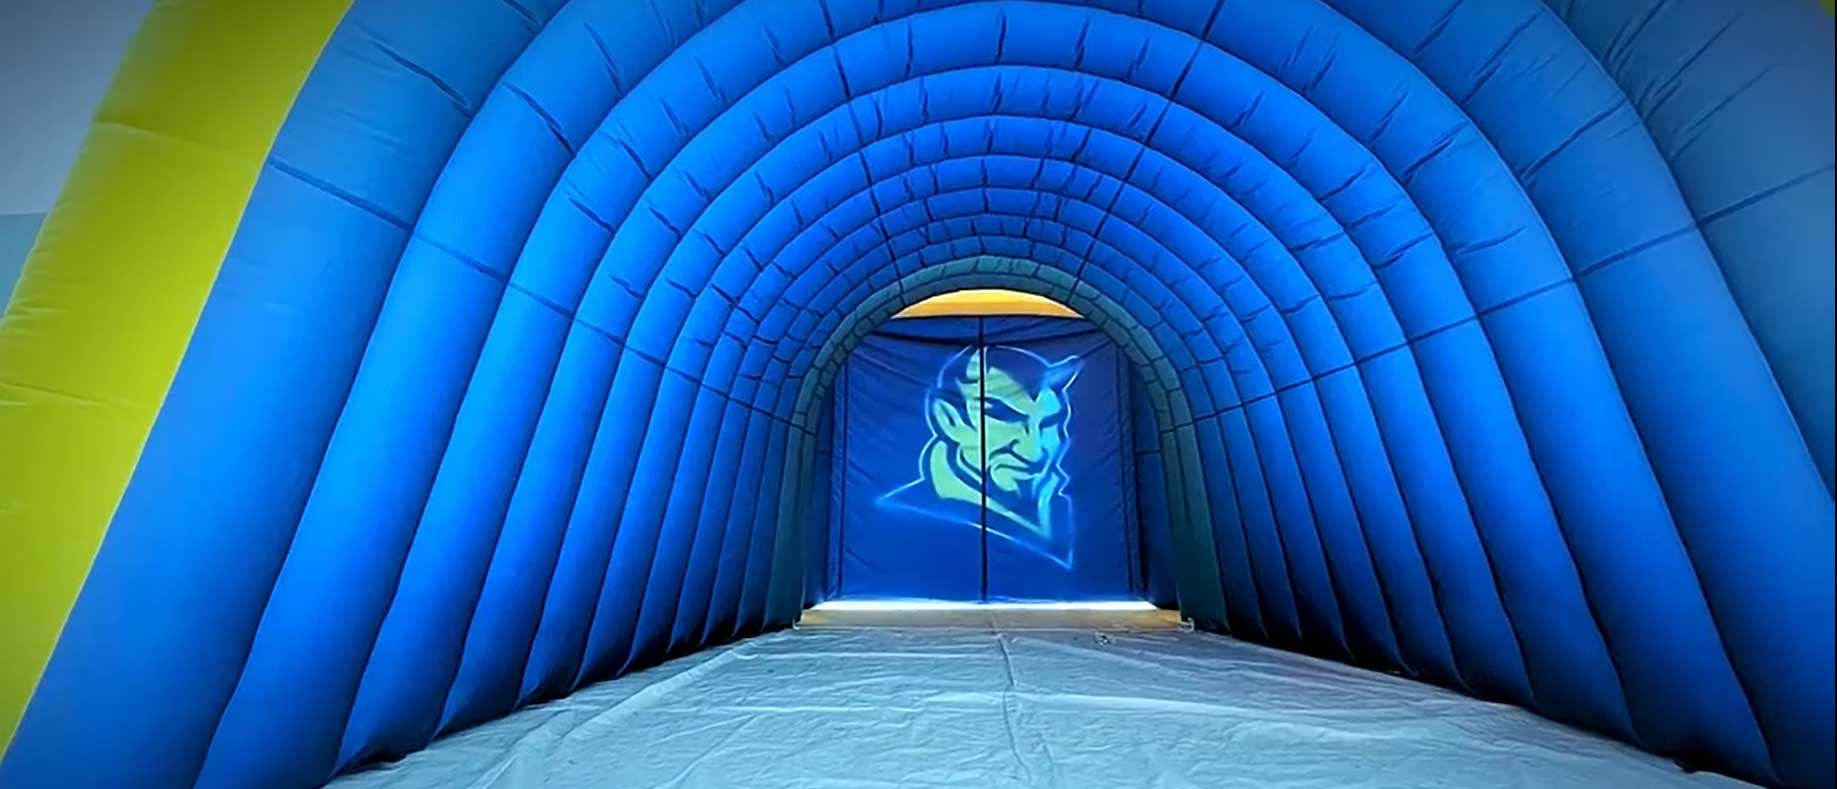 Inflatable Devil Mascot Football Tunnel Inside